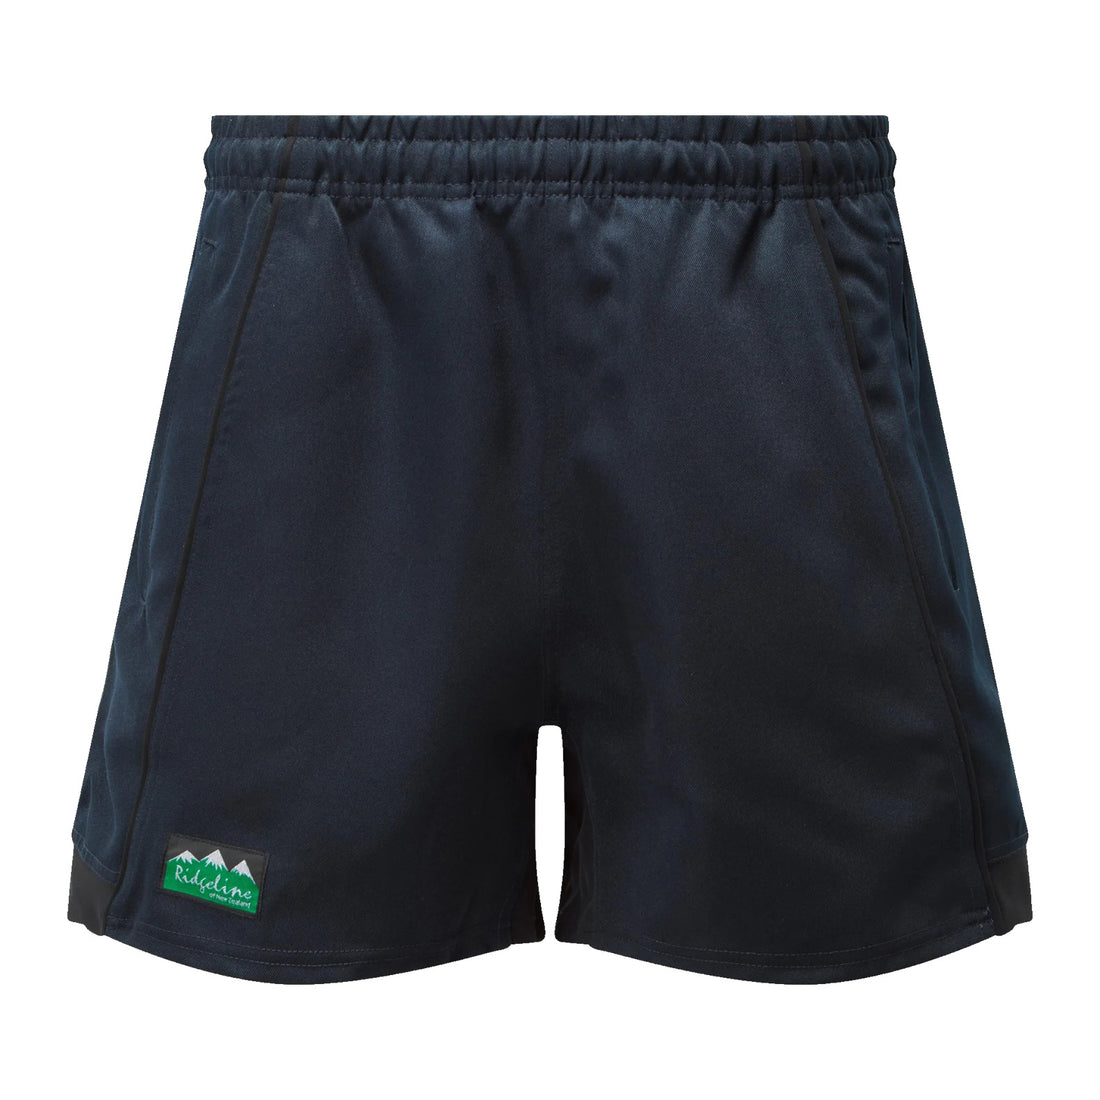 Ridgeline-Classic-Lineout-Shorts